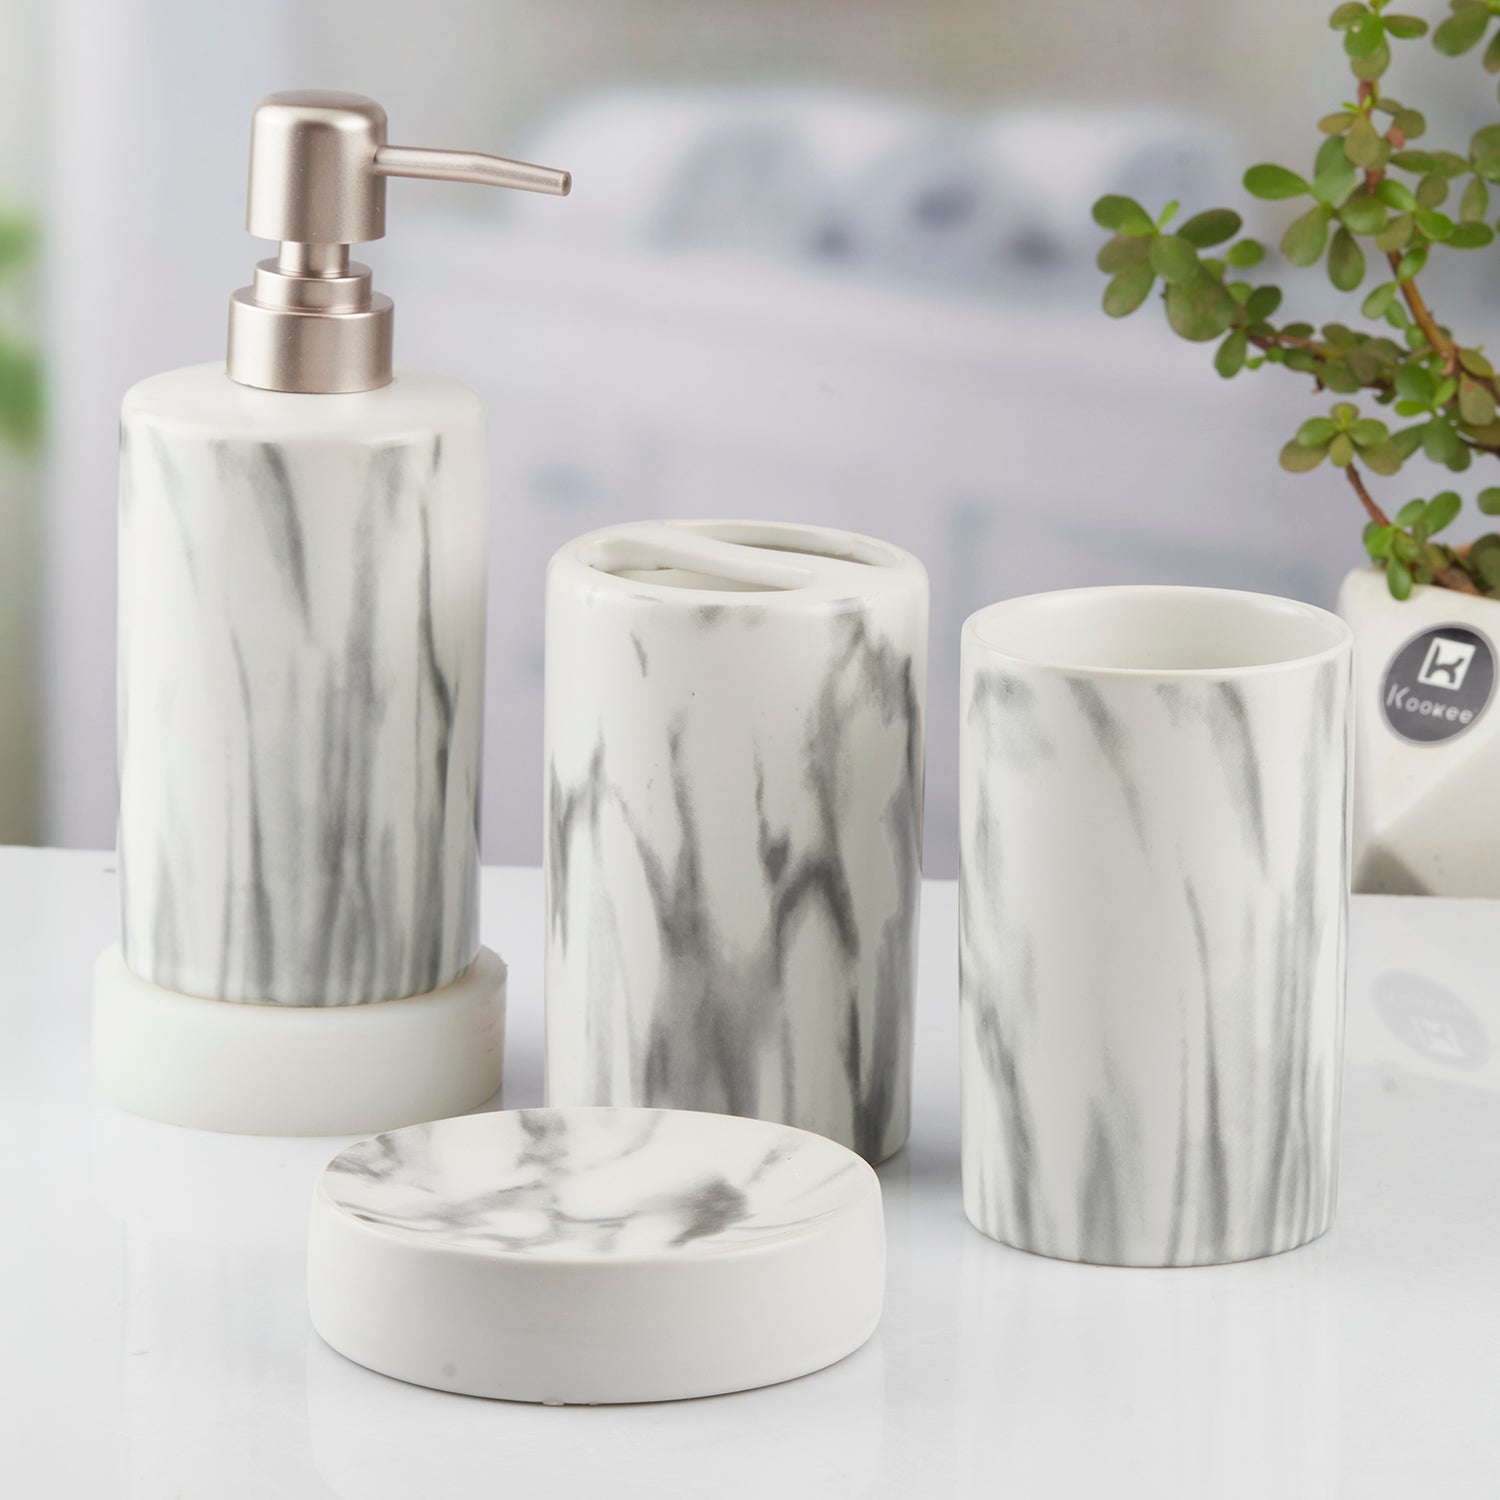 Ceramic Bathroom Set of 4 with Soap Dispenser (10424)